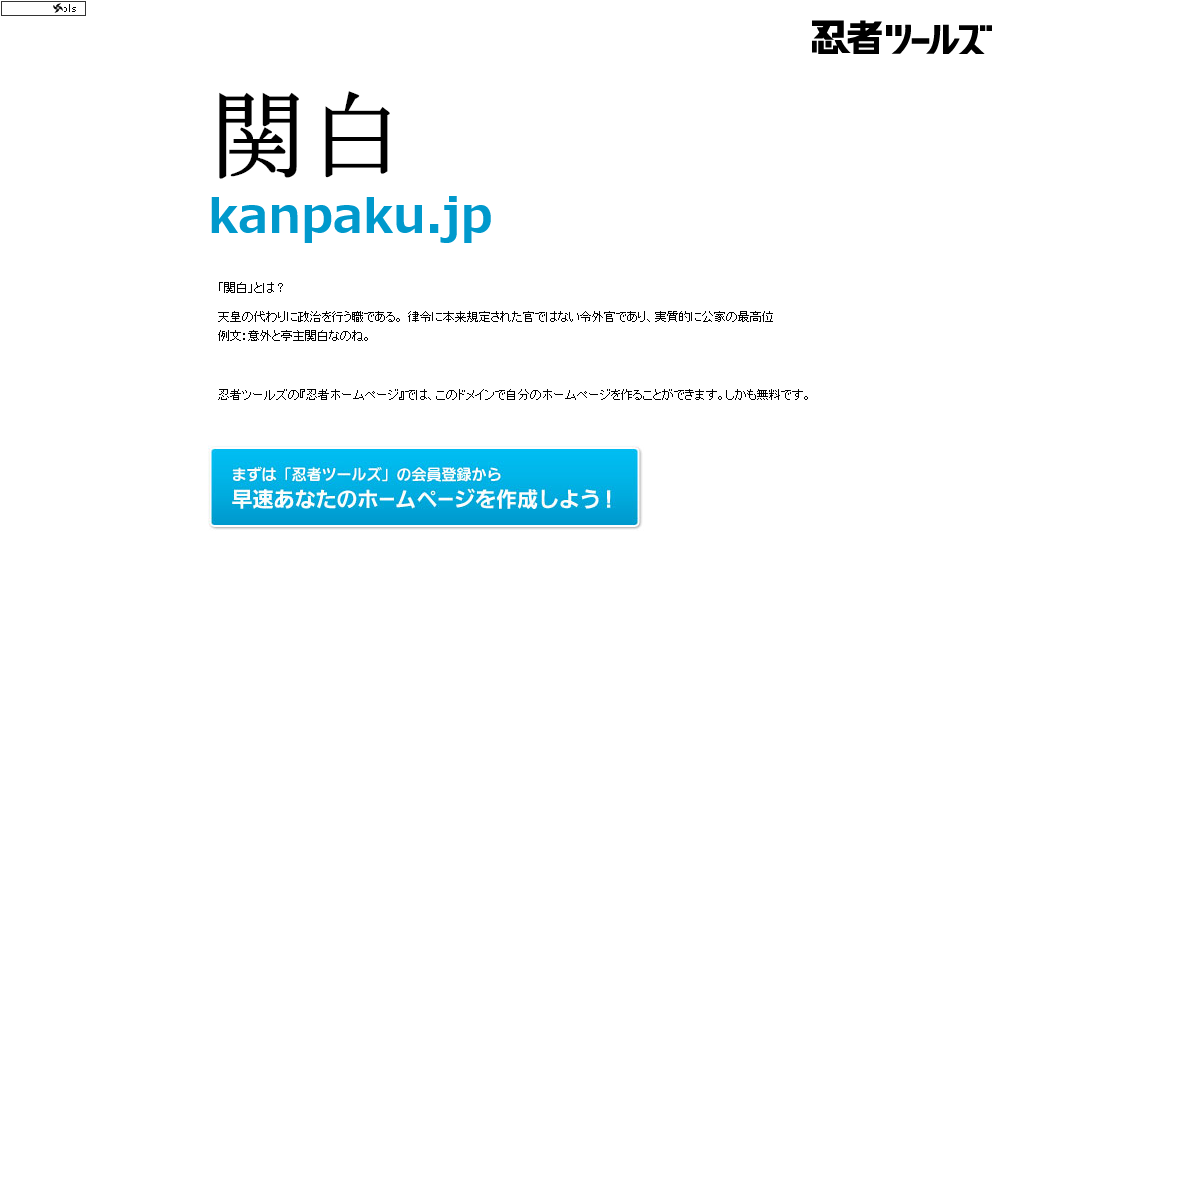 A complete backup of kanpaku.jp